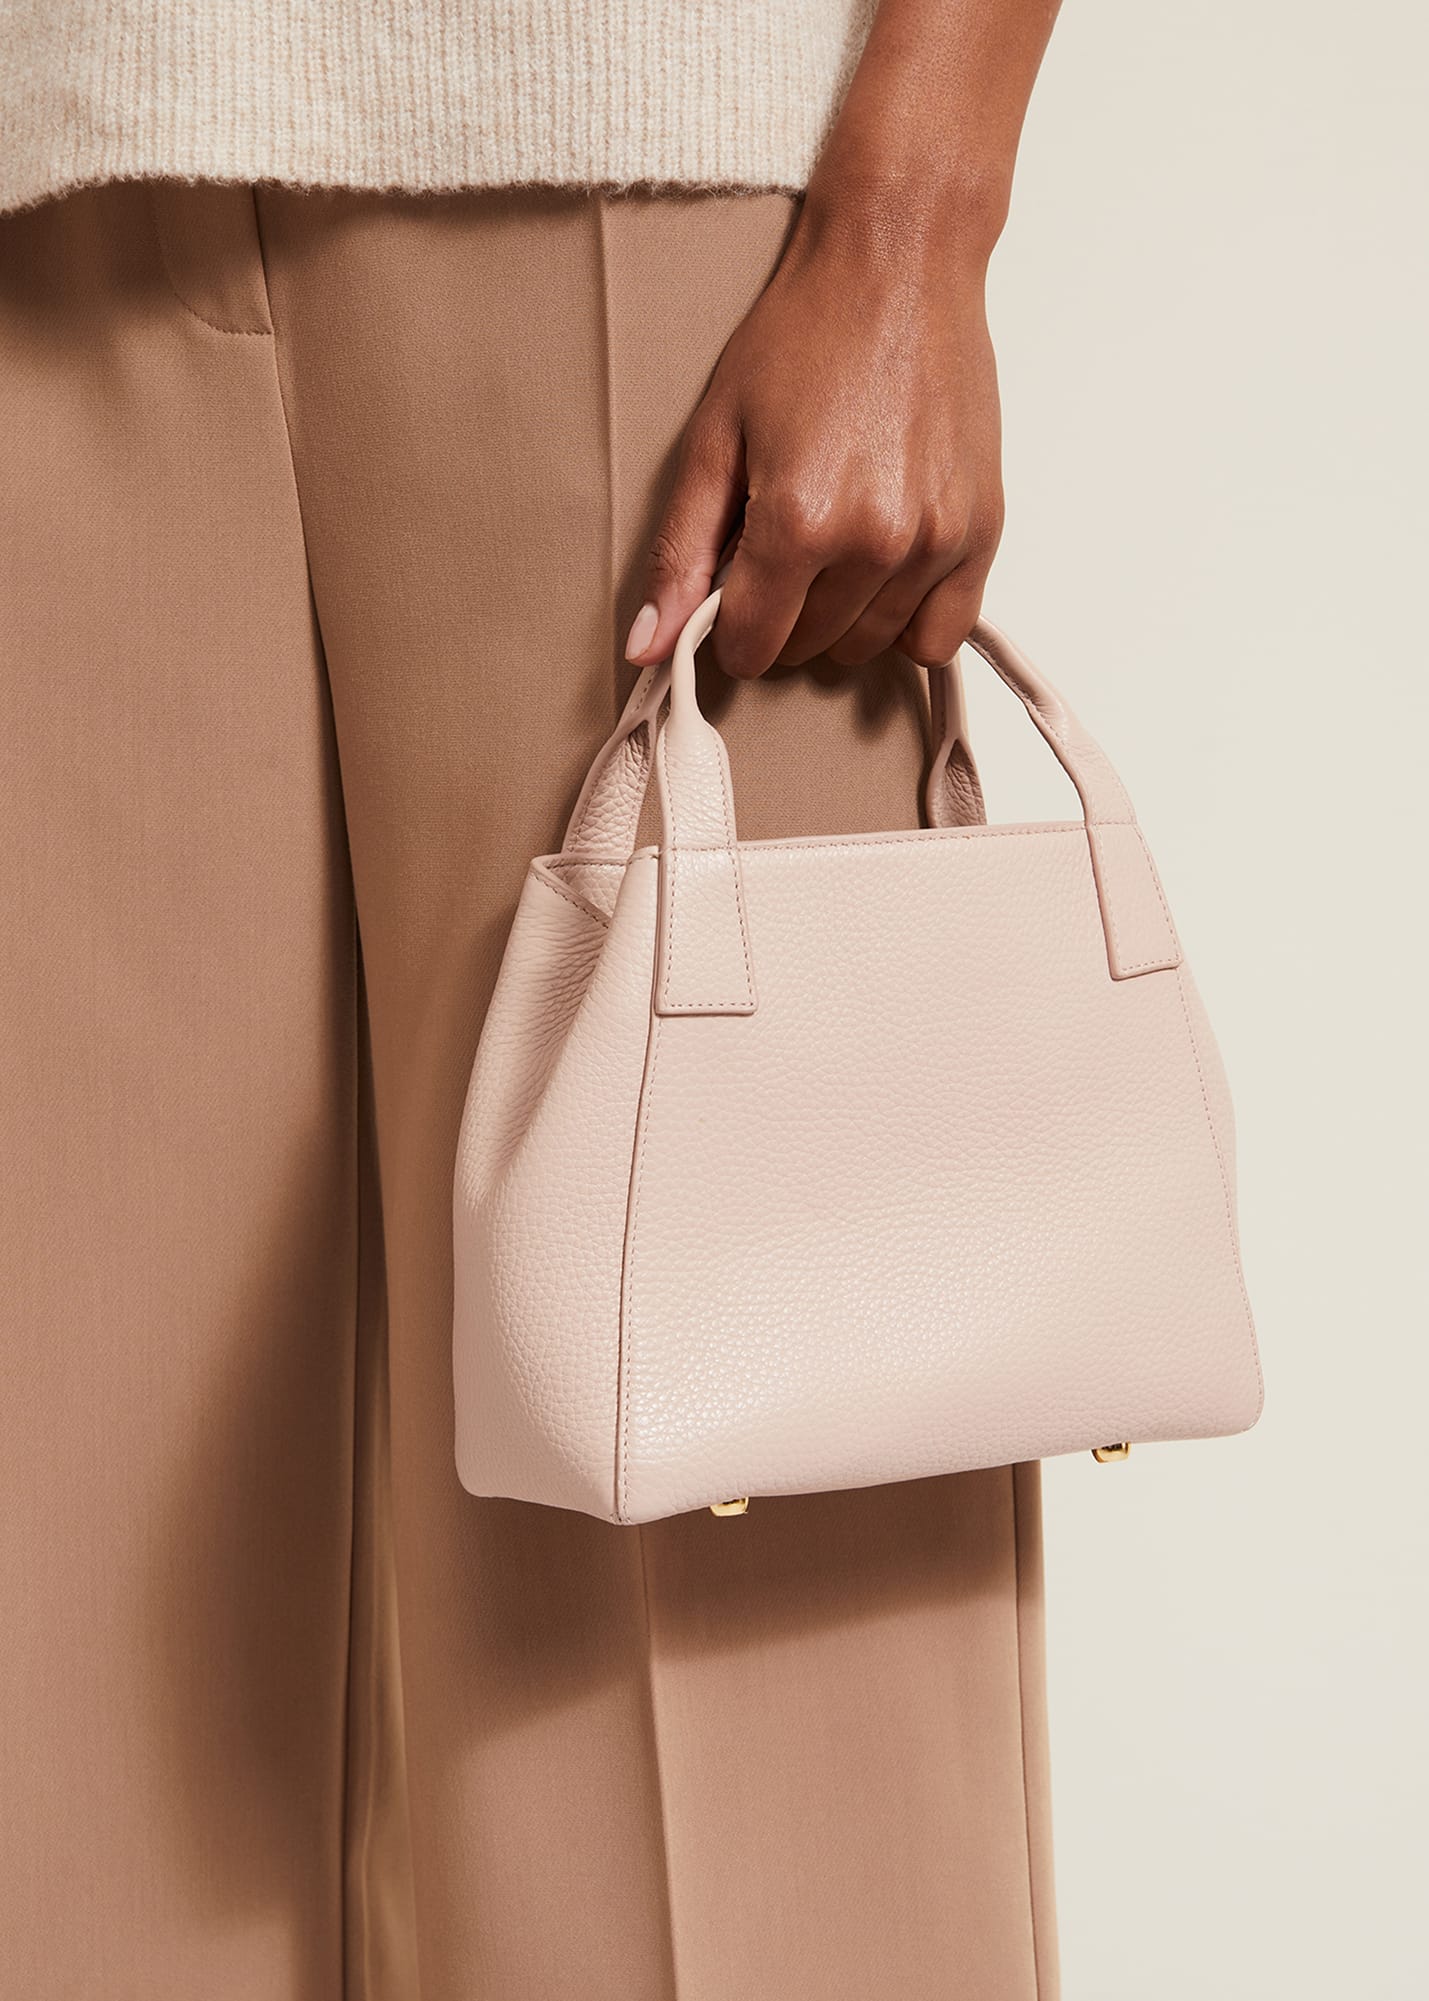 Phase Eight Women's Mini Leather Tote Bag